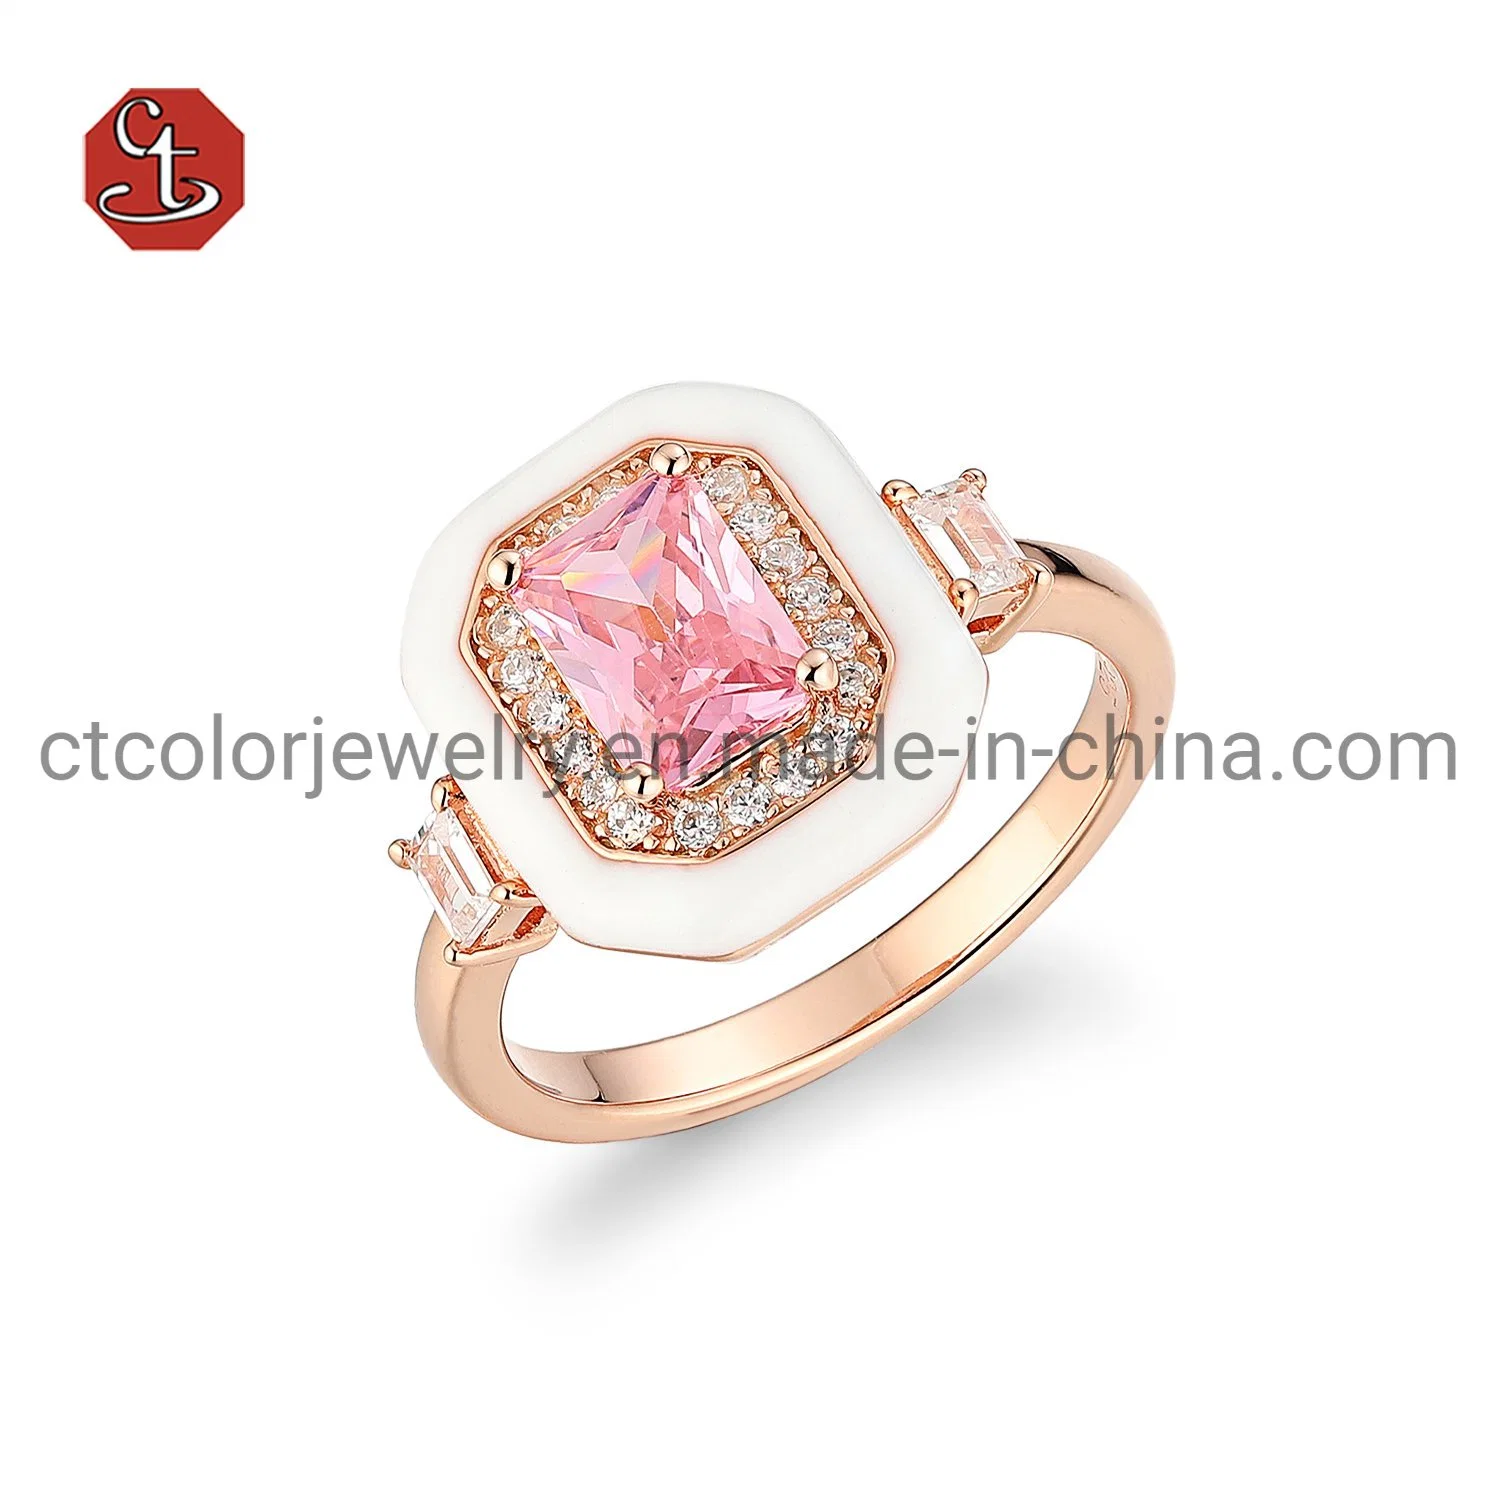 Wholesale 925 silver White enamel Pink Gemstone CZ Ring Jewelry